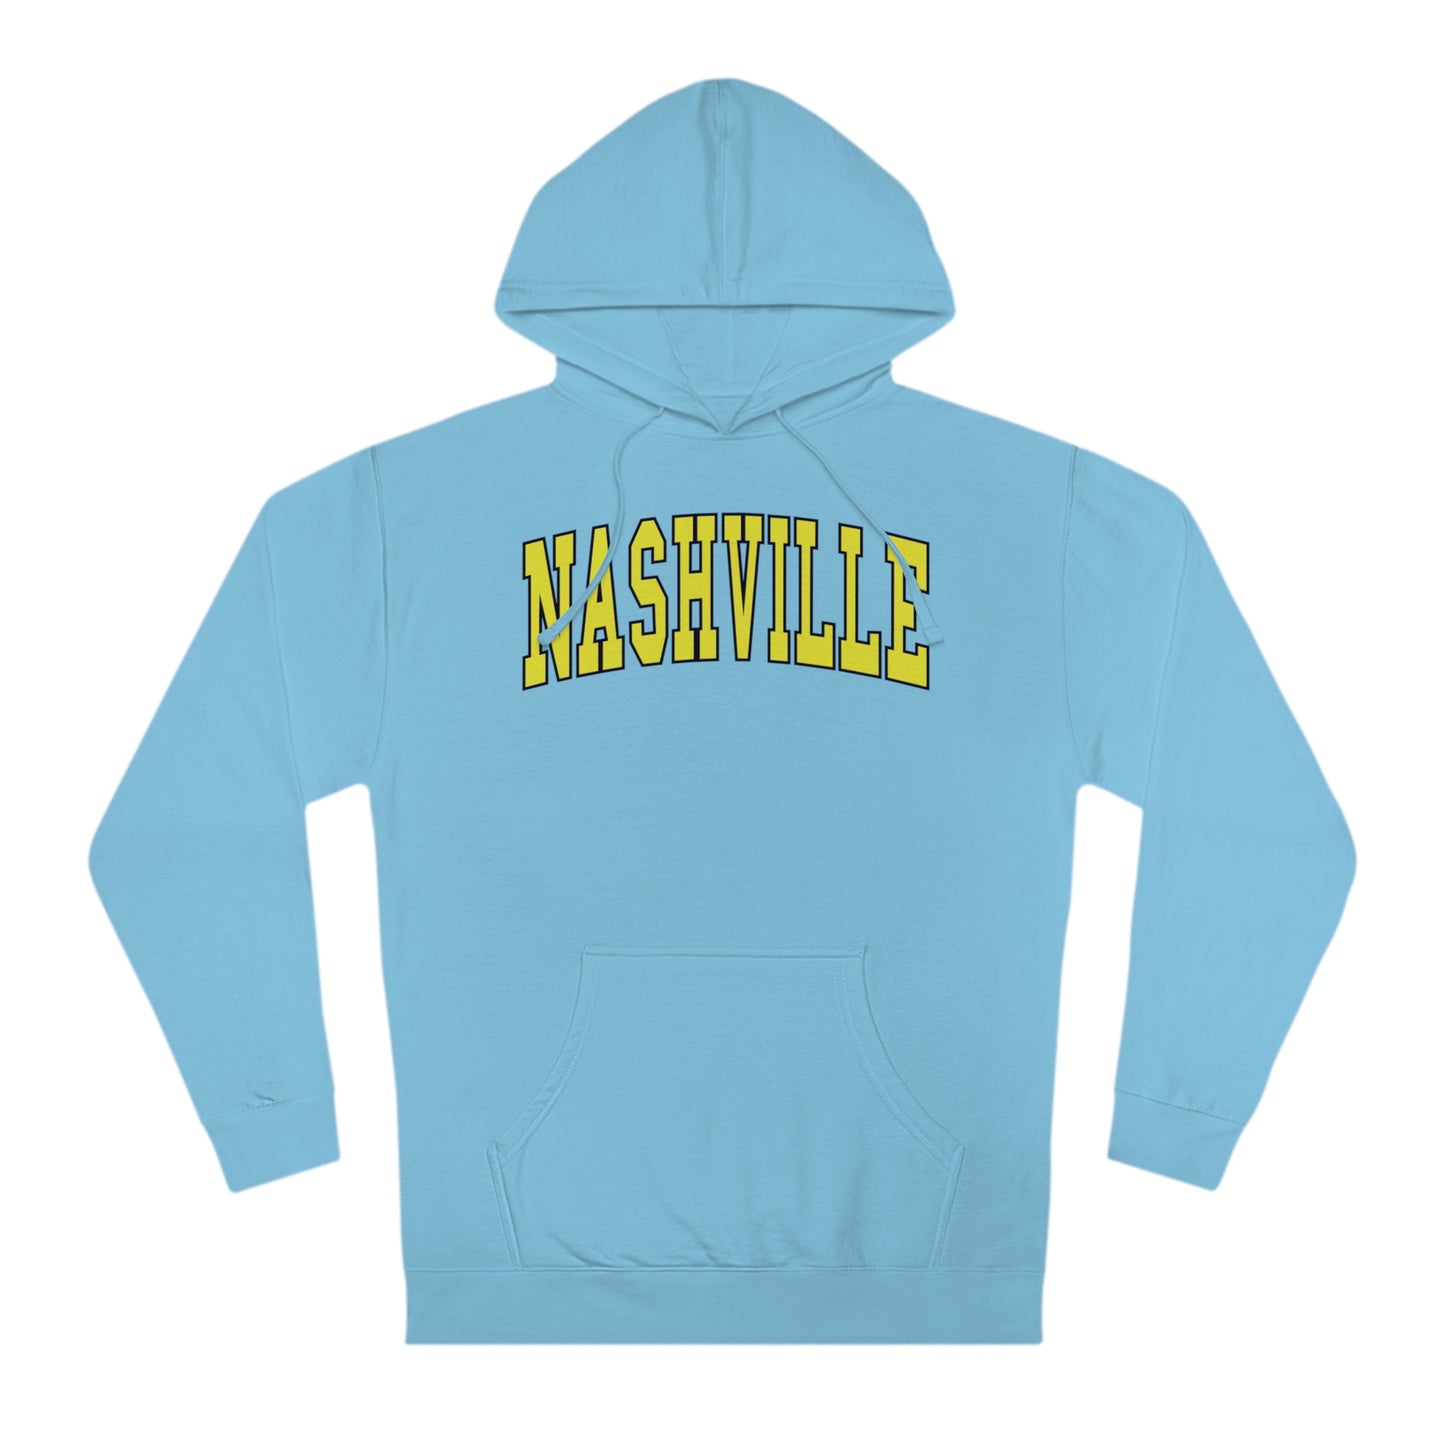 Nashville College Text Unisex Hooded Sweatshirt